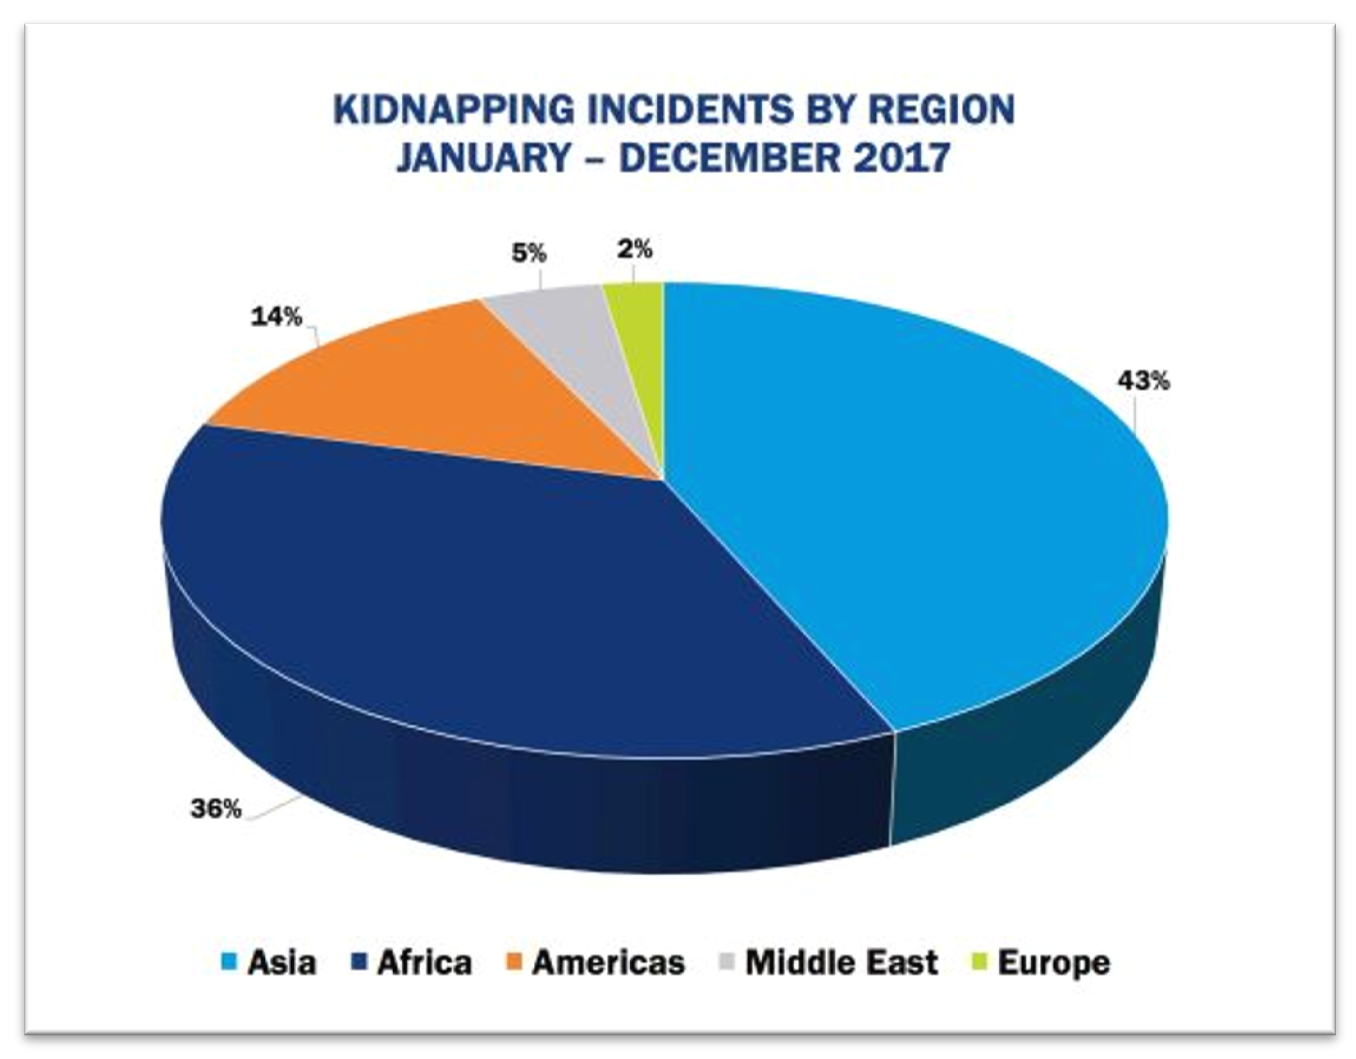 Malaysia, Malaysia Indicator, kidnapping, Sabah